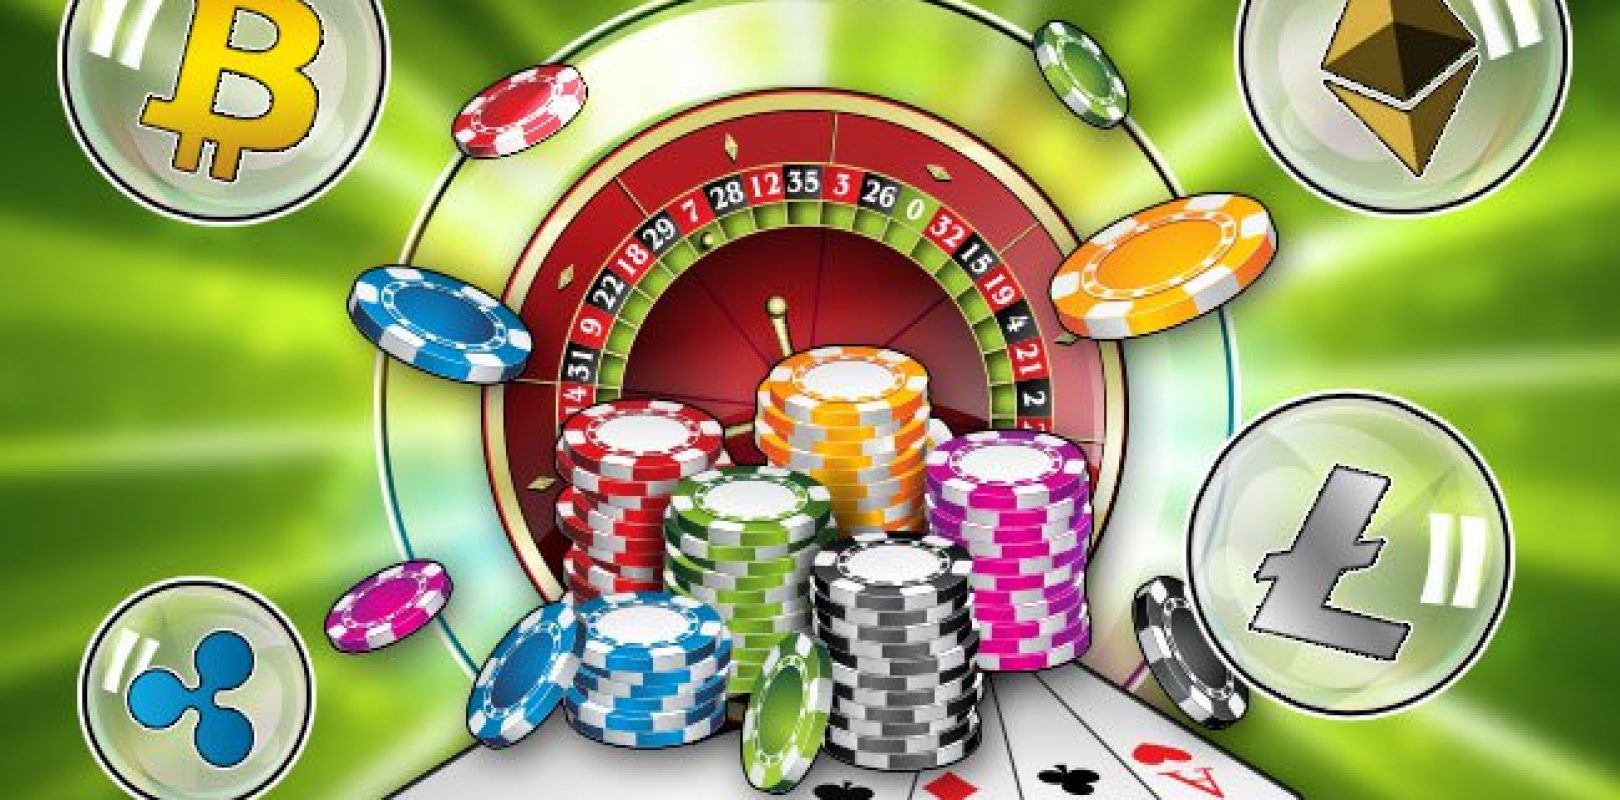 Flash casinos offering no deposit bonuses